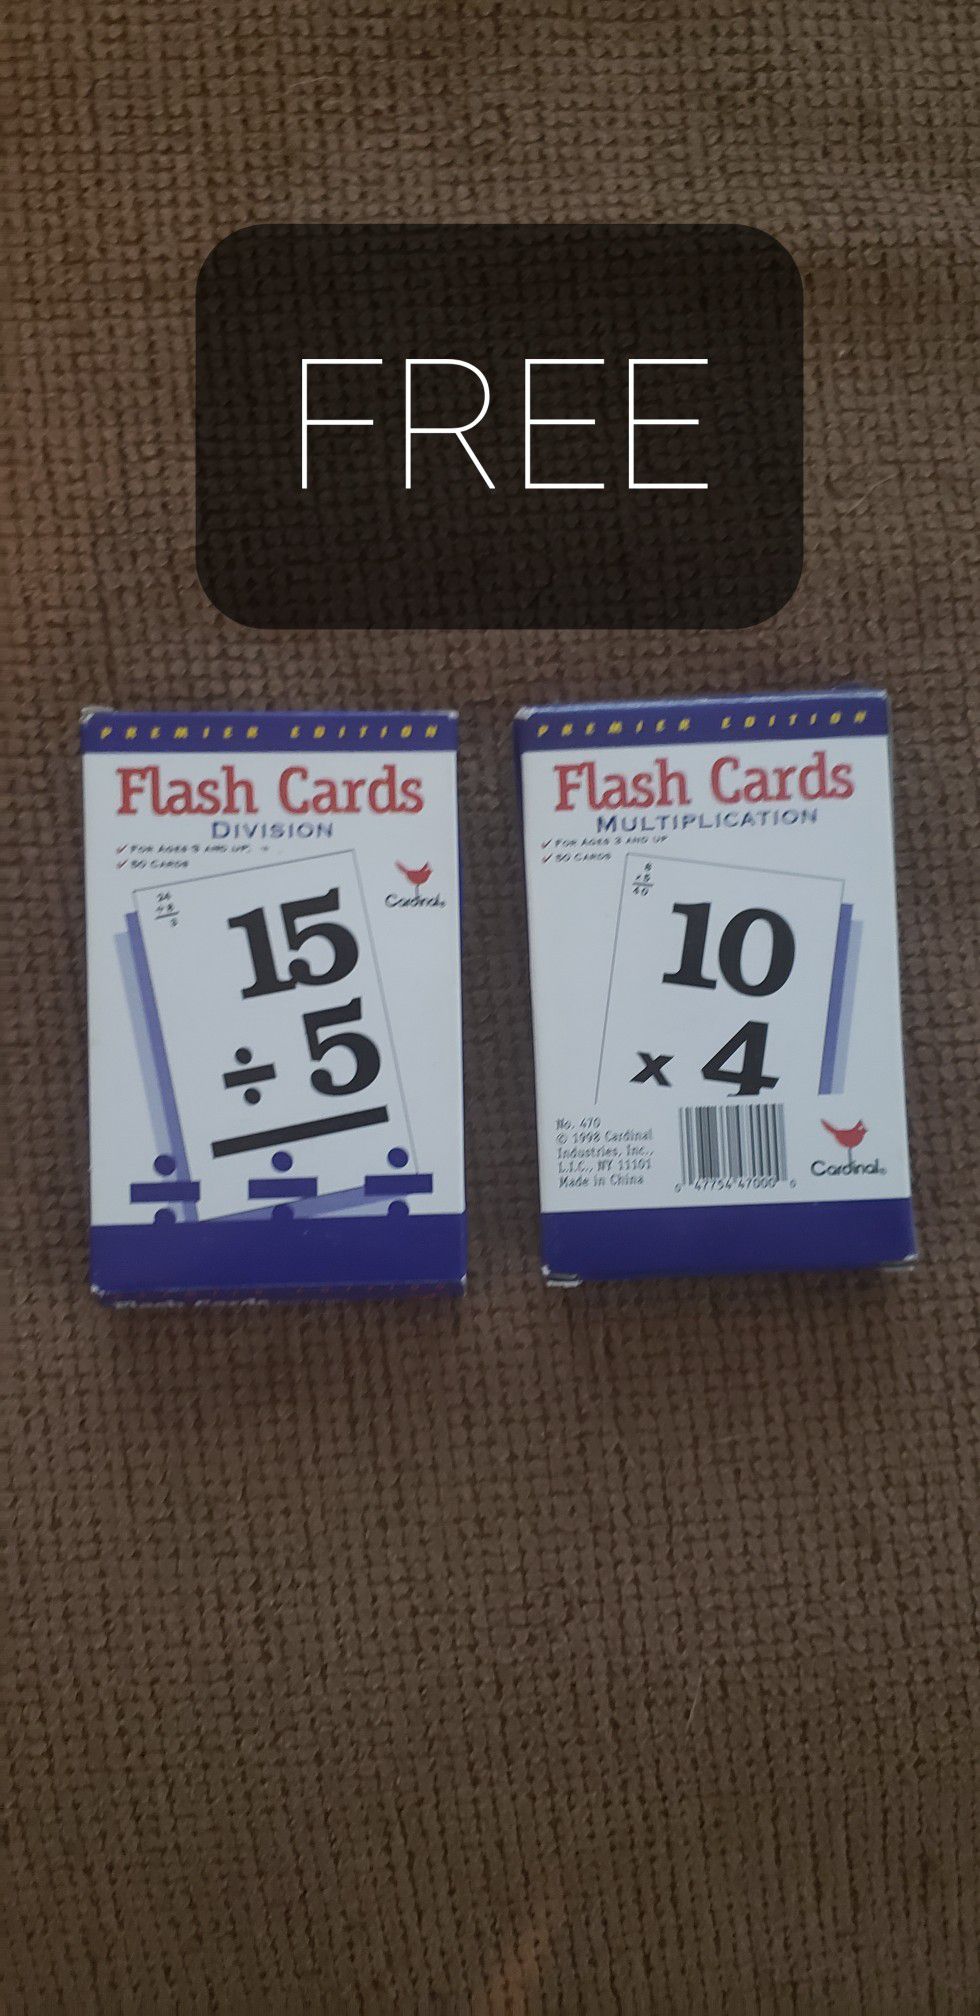 FREE flash cards